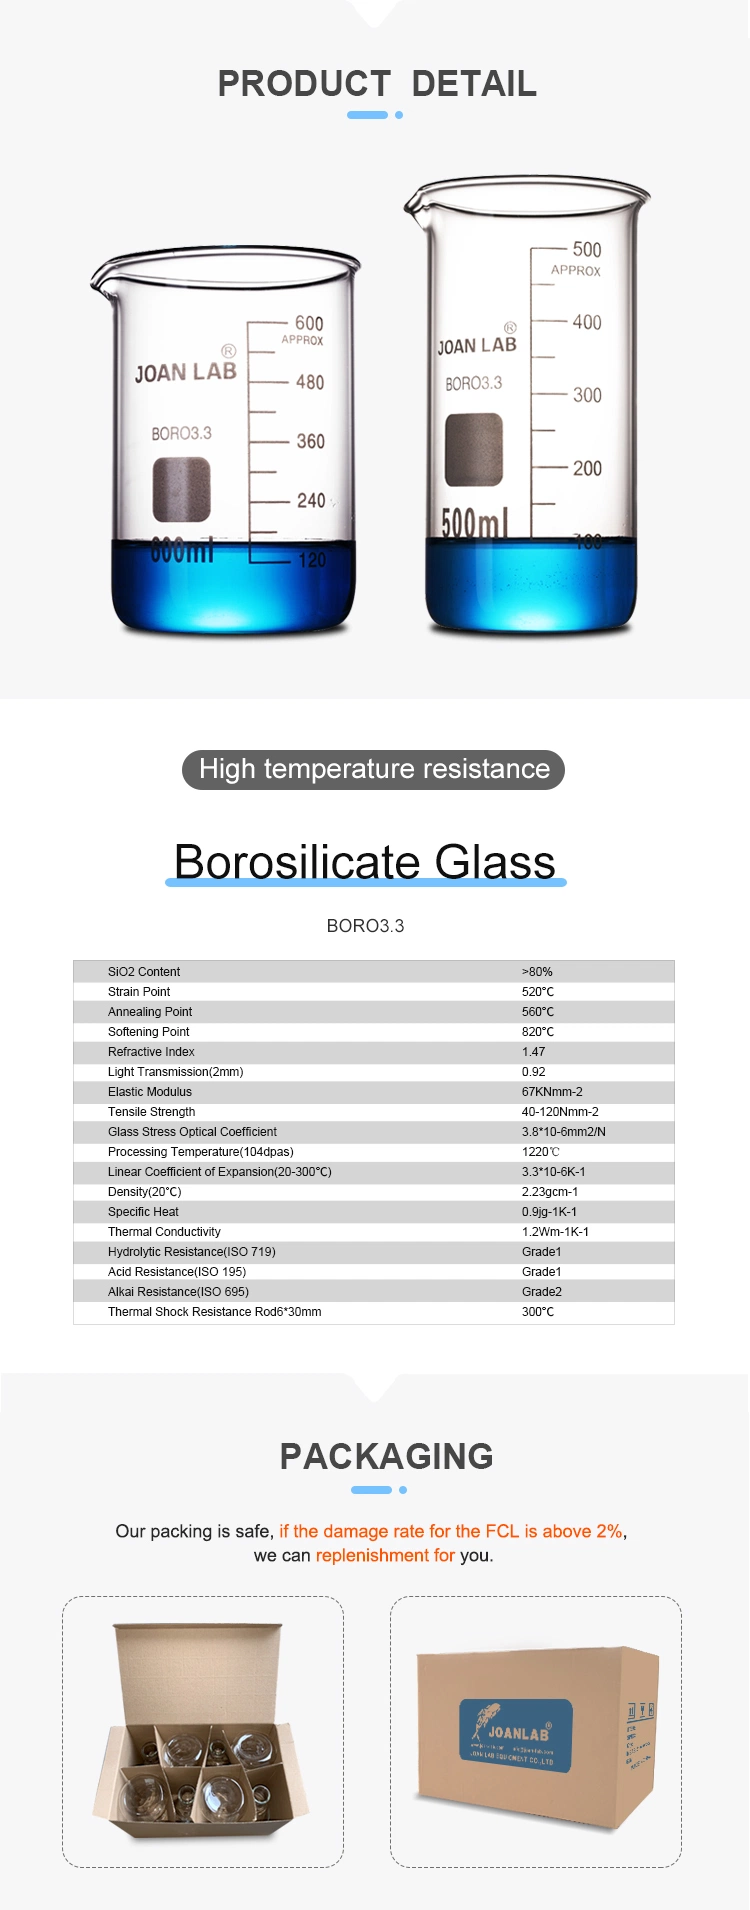 Joan Lab Glassware Glass Beaker Manufacturer